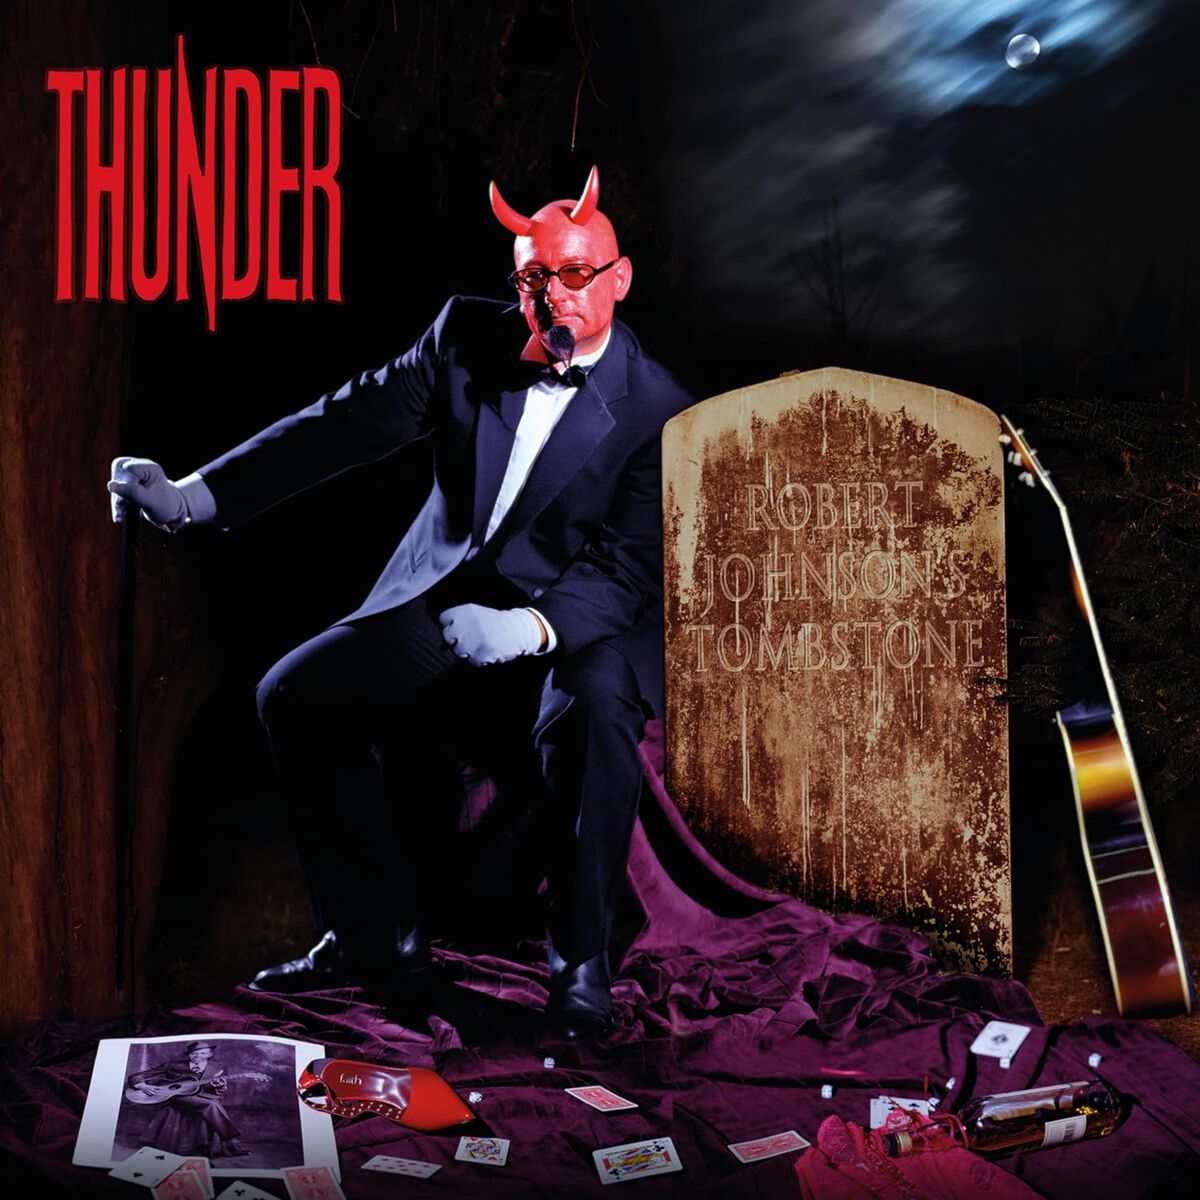 Thunder Robert Johnson`s tombstone CD multicolor